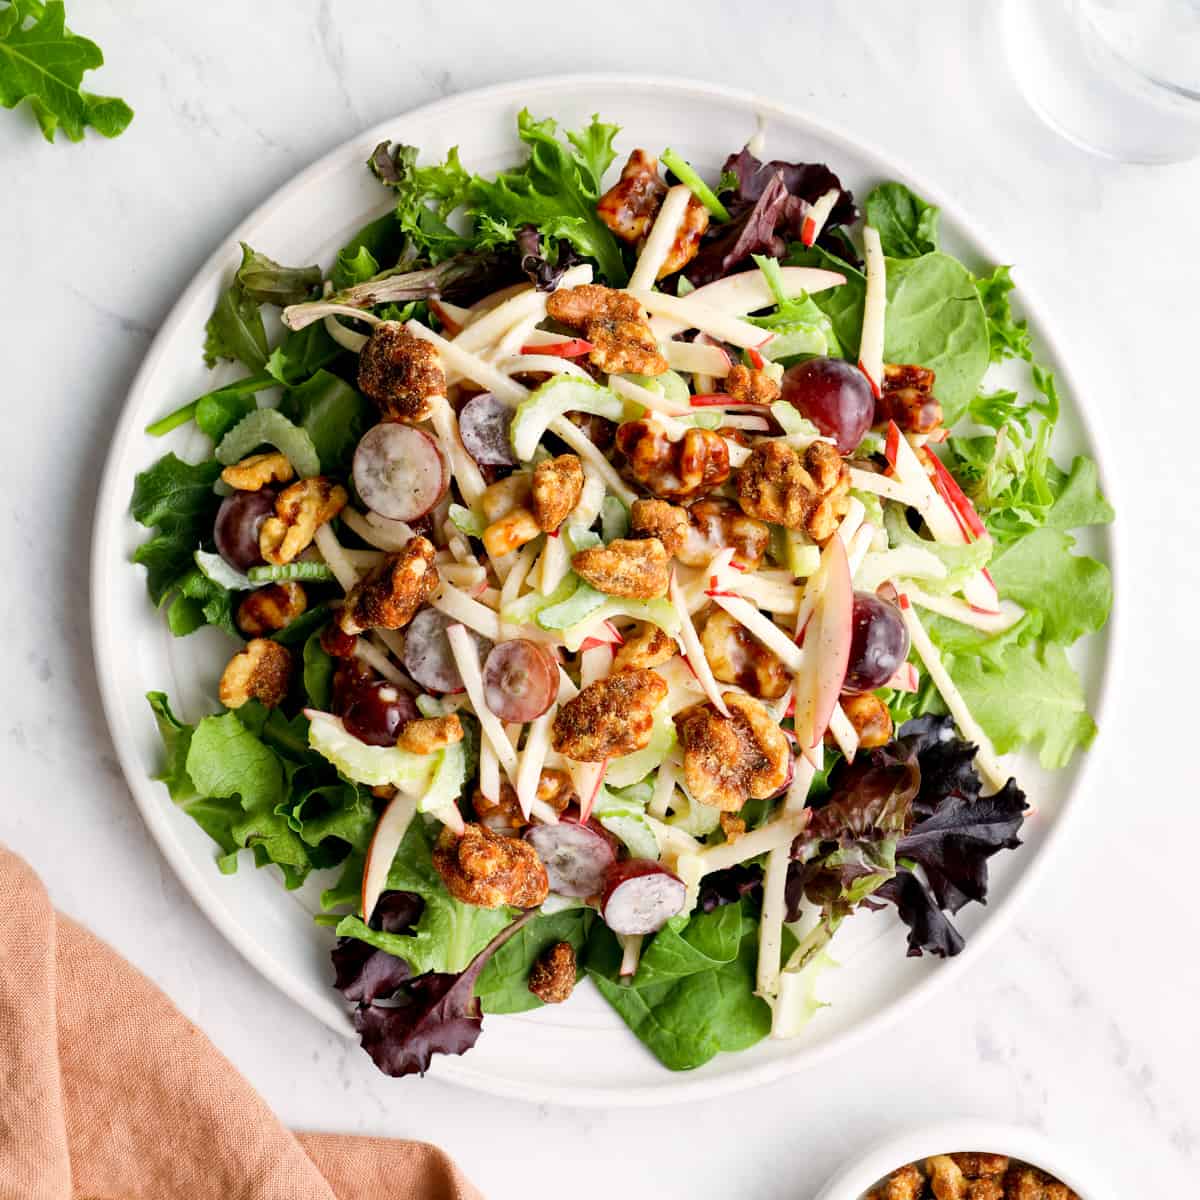 https://www.thecookierookie.com/wp-content/uploads/2022/09/Featured-Waldorf-Salad-1.jpg